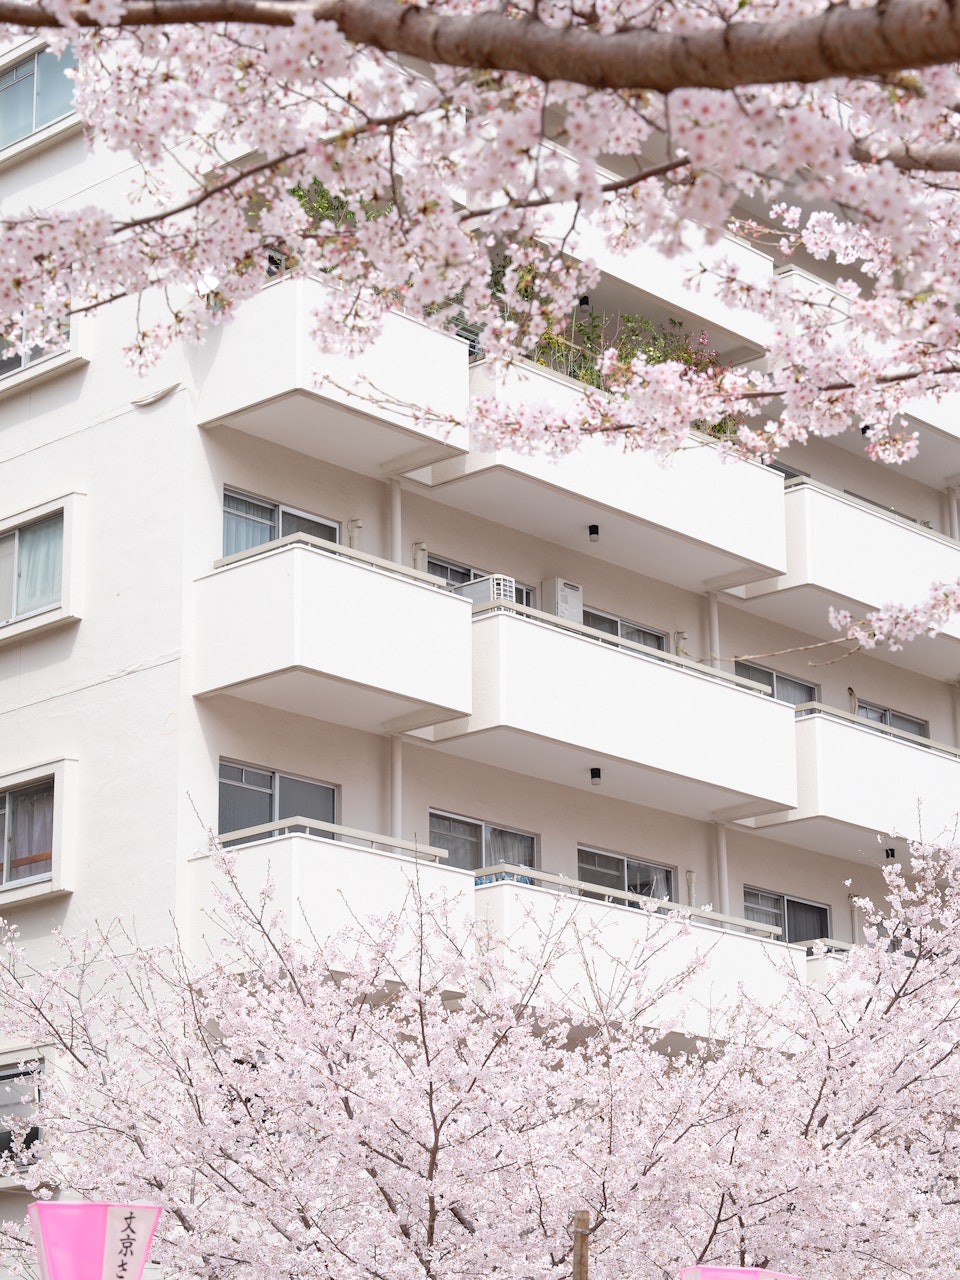 Sakura frames